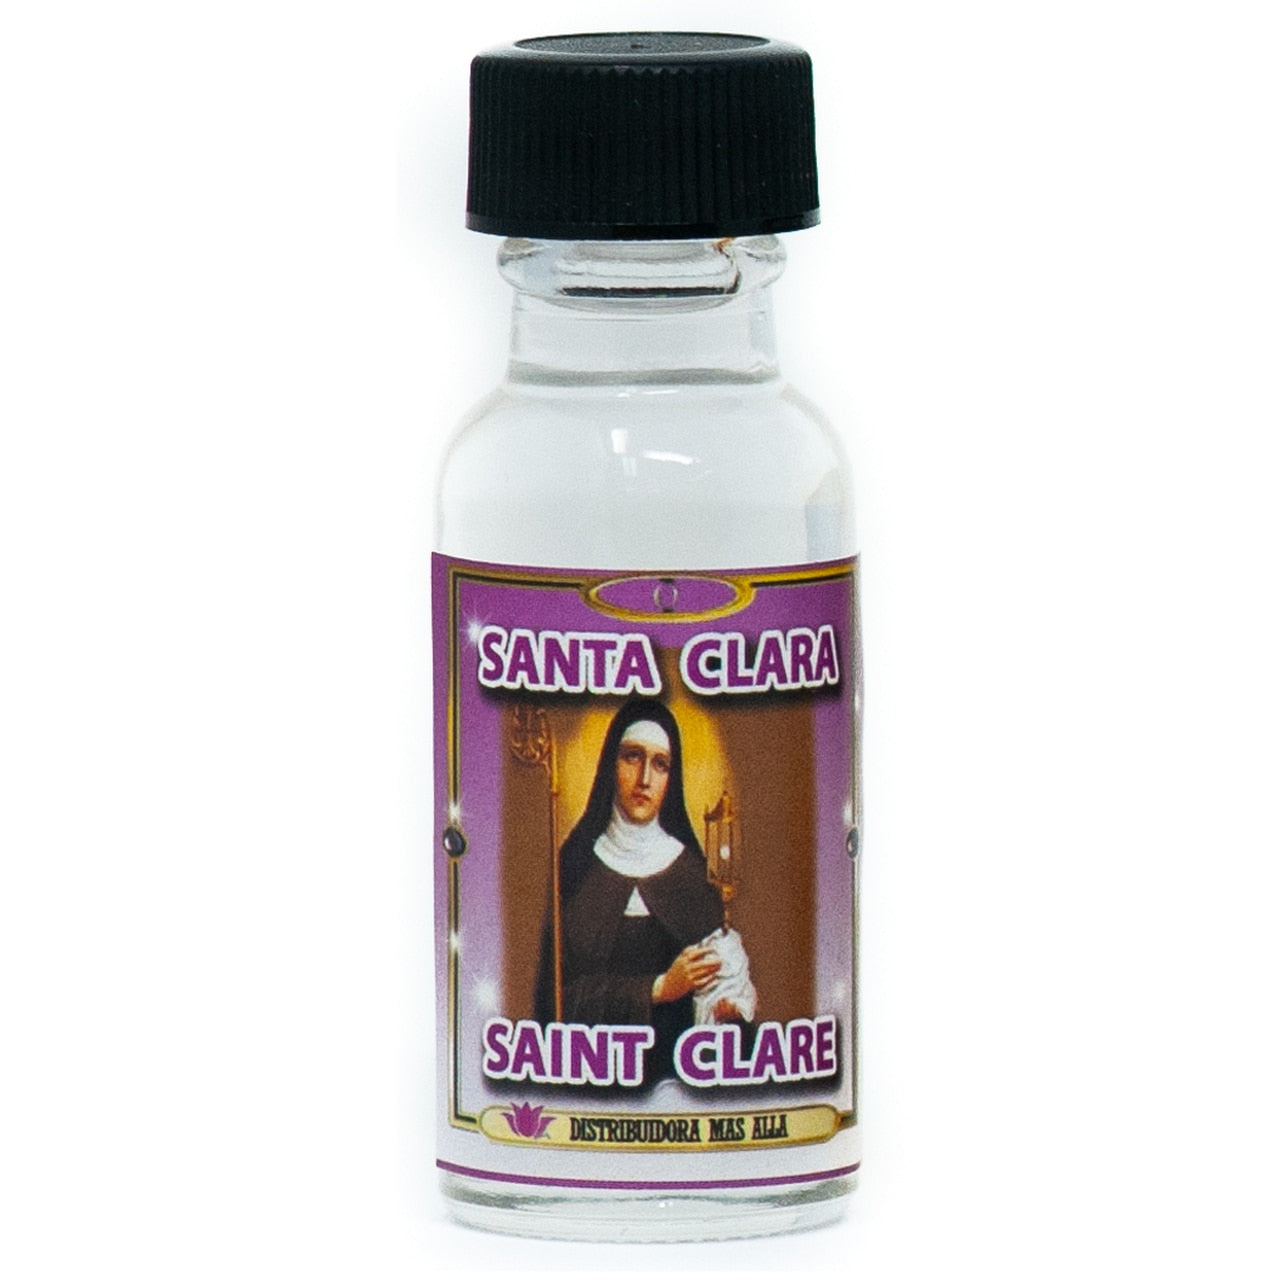 Saint Clara Oil